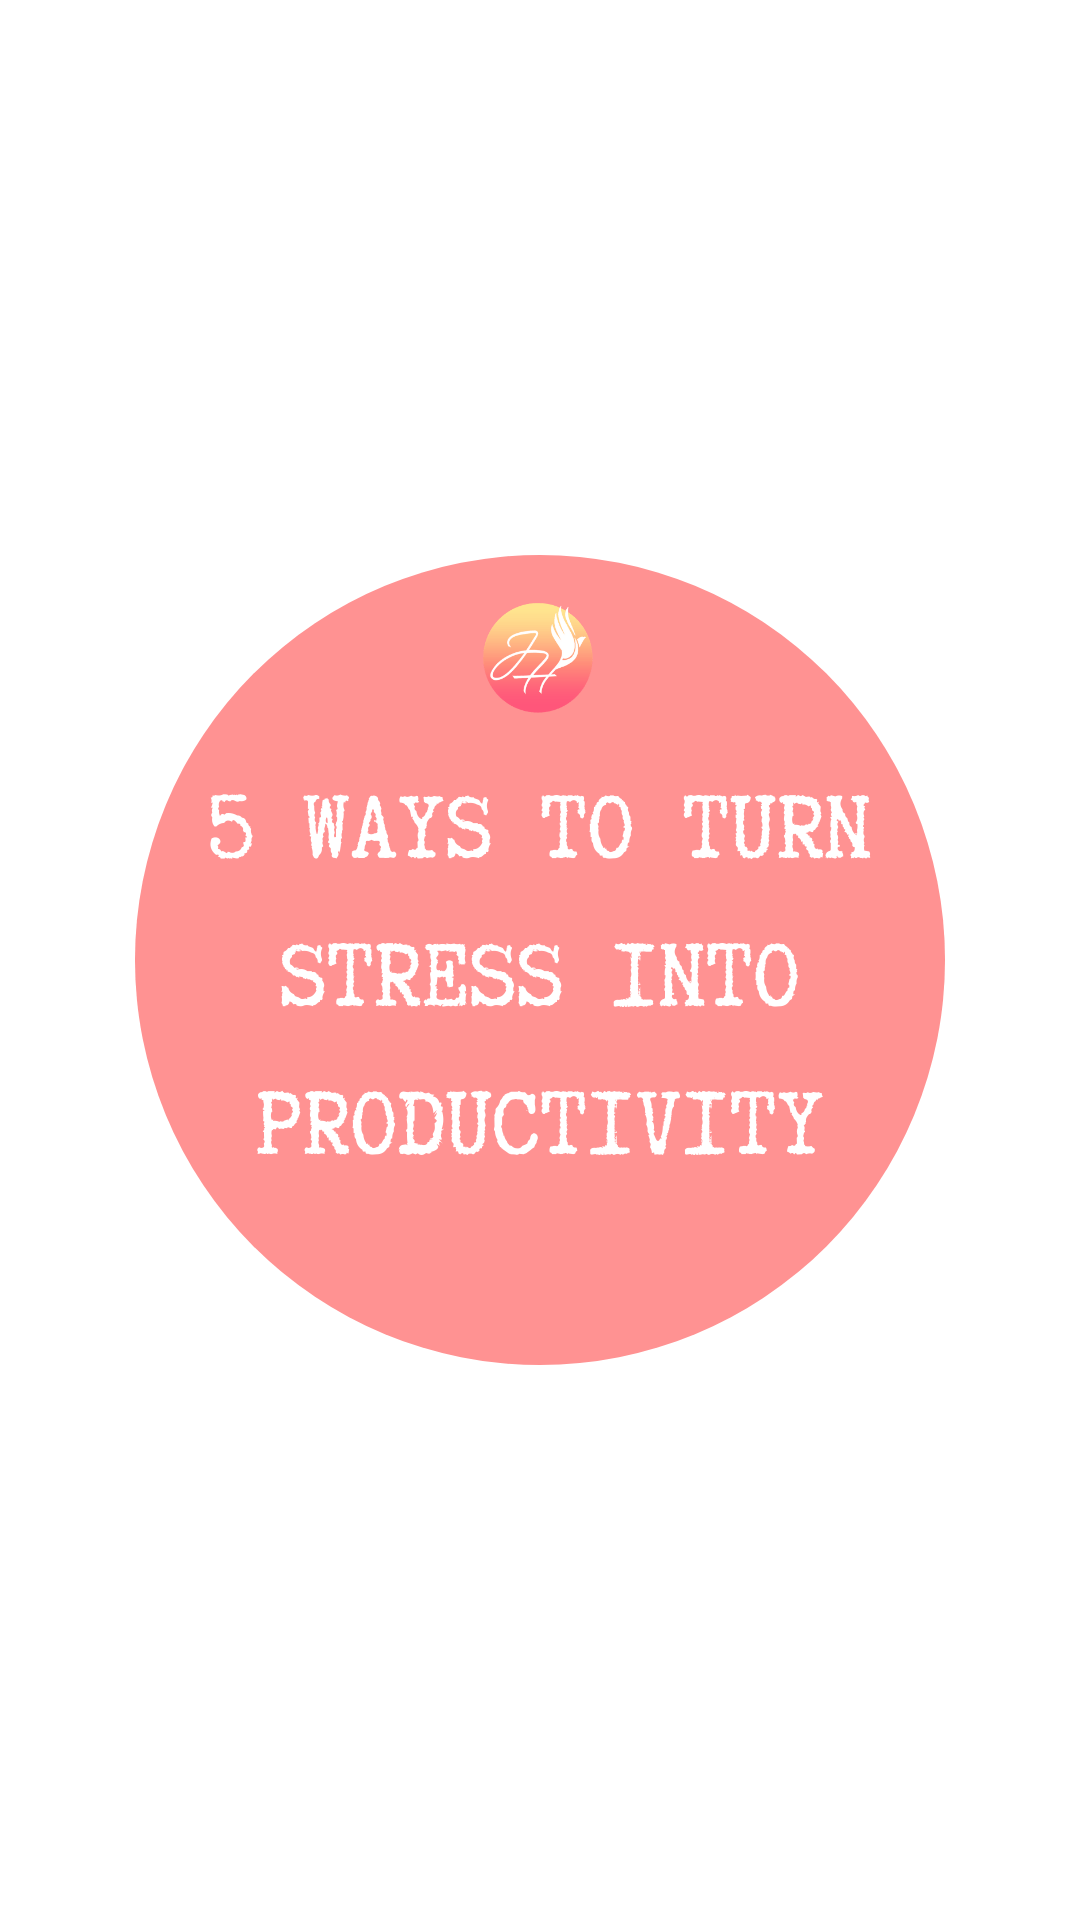 5 WAYS TO TURN STRESS INTO PRODUCTIVITY